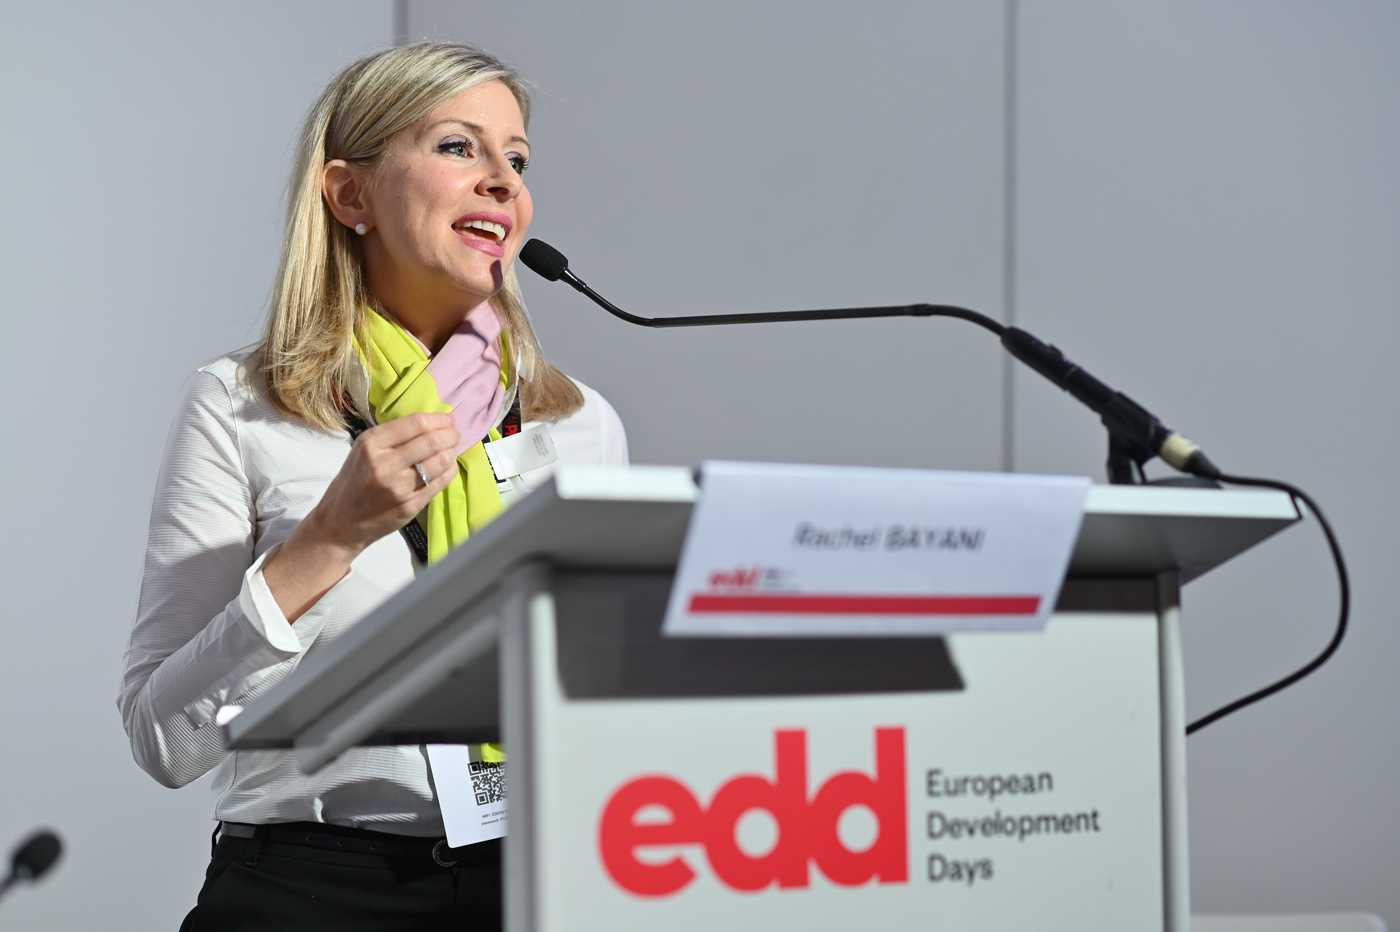 Woman speaking at European Development Days